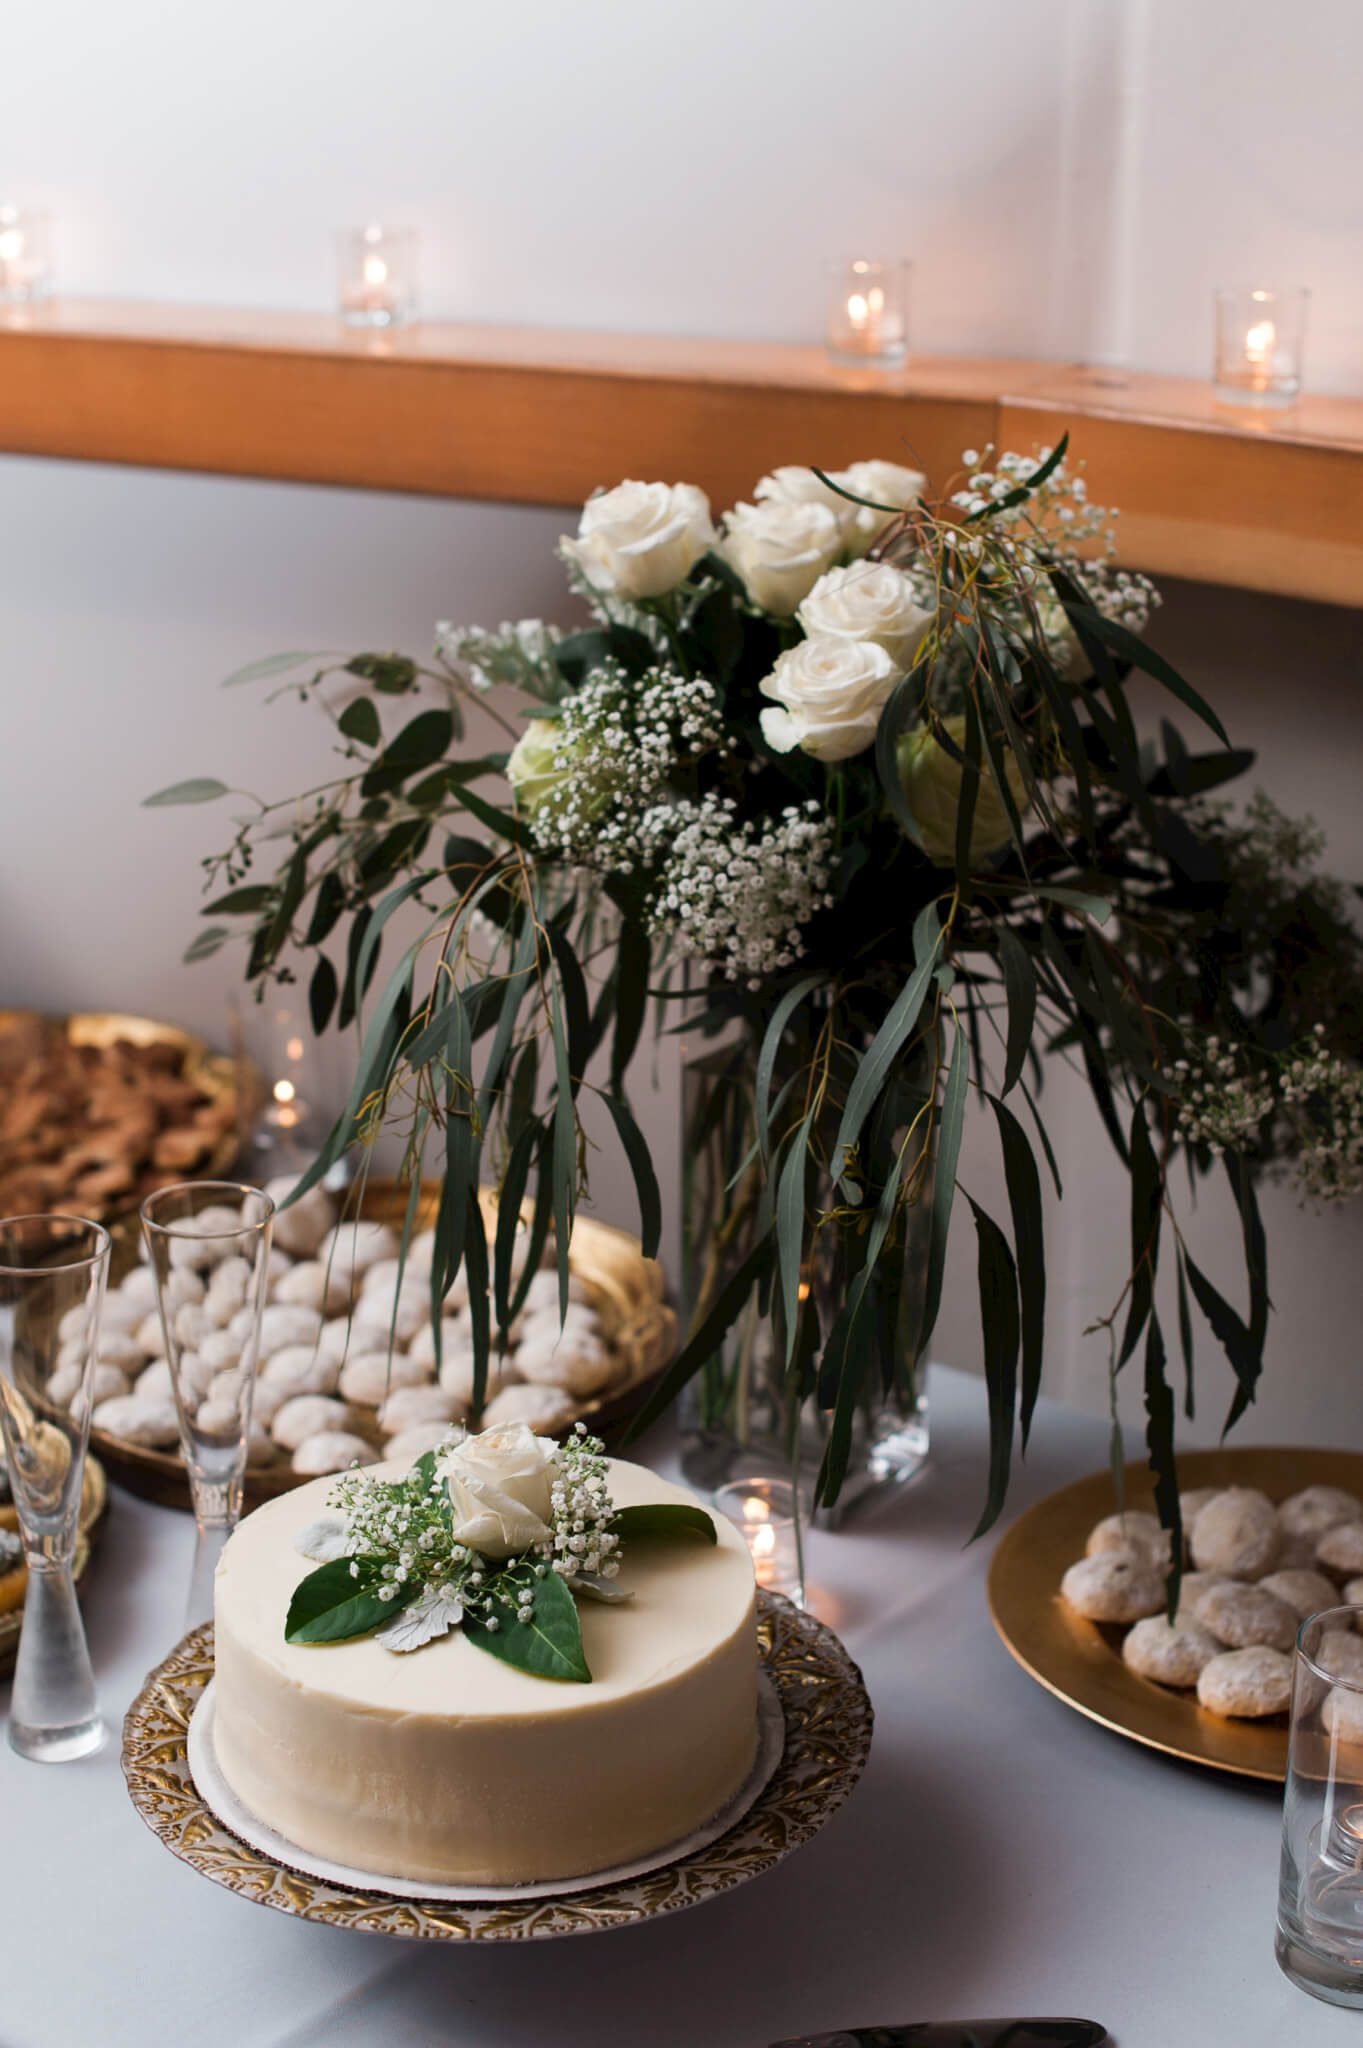 Beautiful wedding cake and deserts on display at Portland Holocene. Photography by Portland wedding photographer Briana Morrison